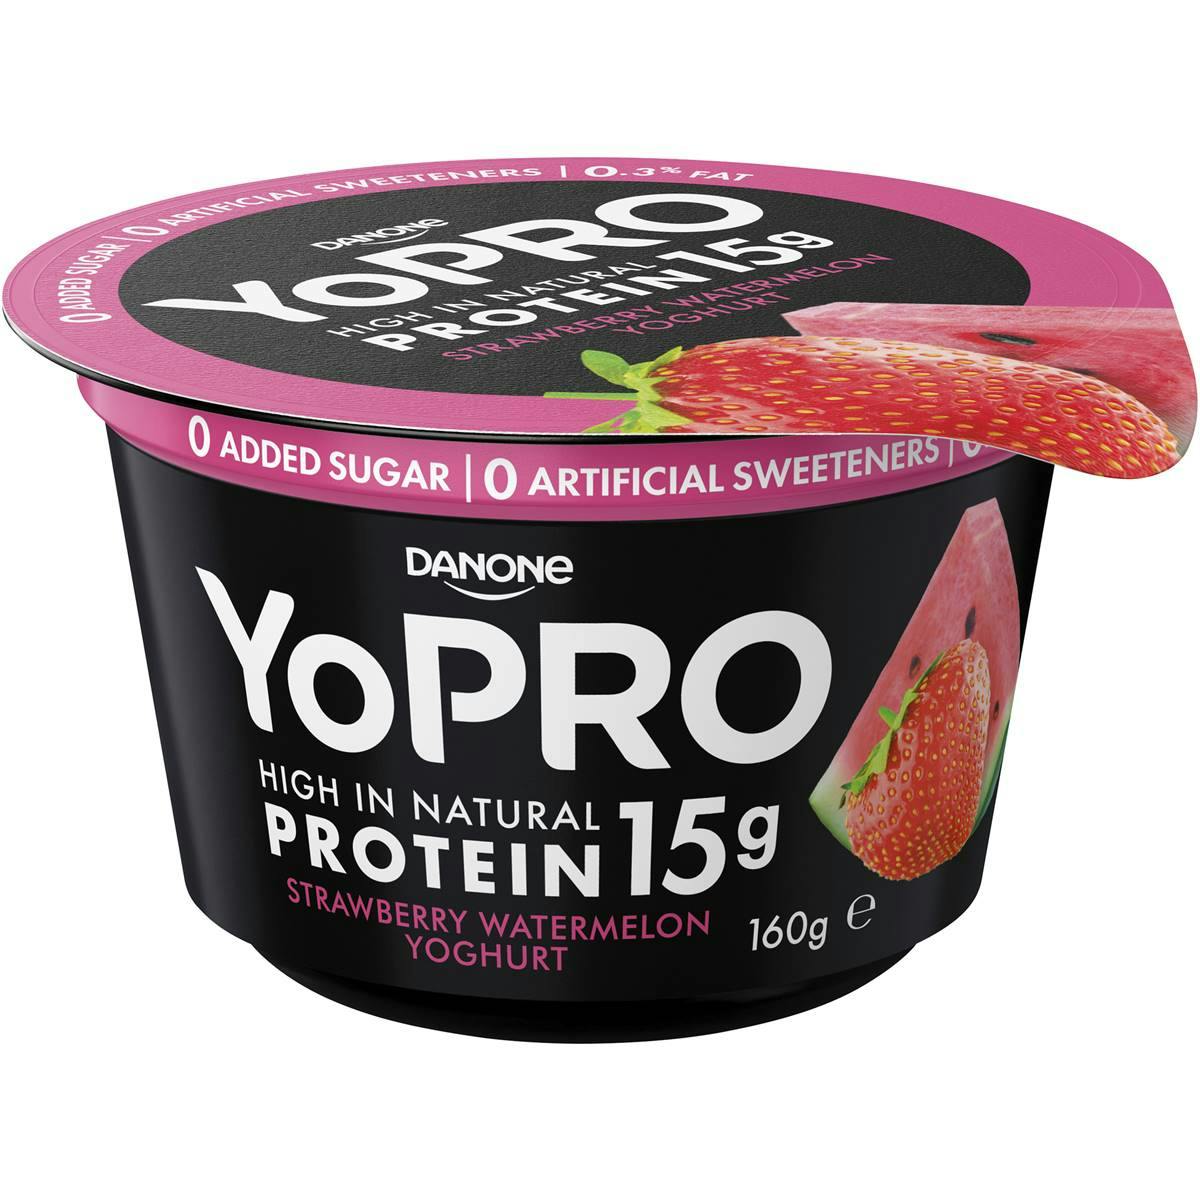 Danone Yopro Strawberry Watermelon Yoghurt